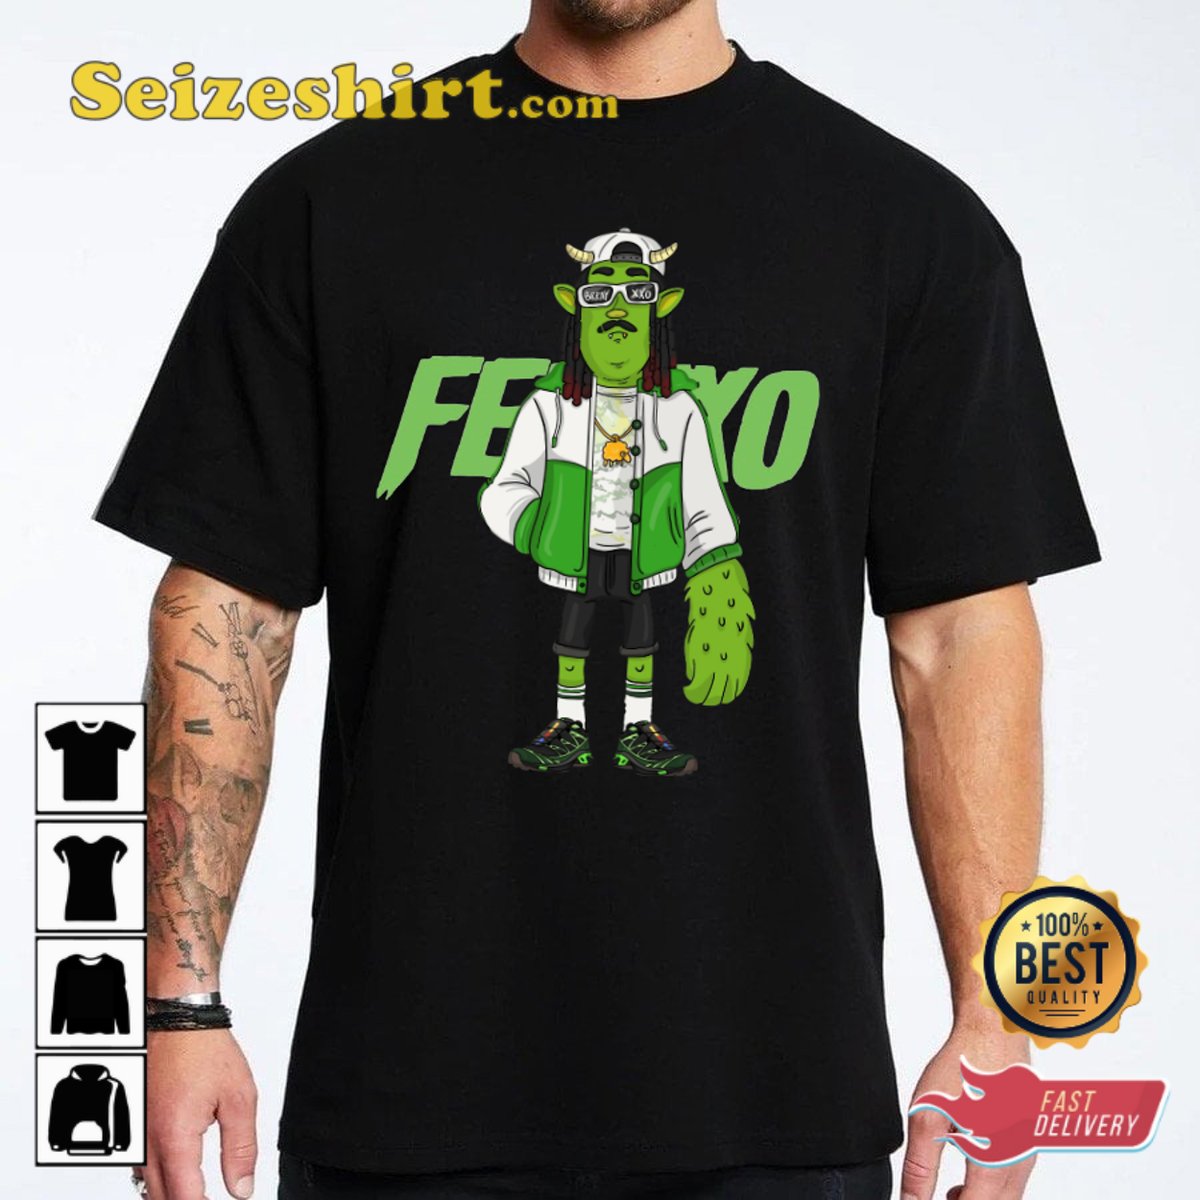 Feid Ferxxo Graphic Tee Shirt Gift For Fans 
seizeshirt.com/feid-ferxxo-gr… 
#Feid #Ferxxo #FerxxoCalipsis #FerxxoCalipsisworldtour #Music #Trending #Seizeshirt